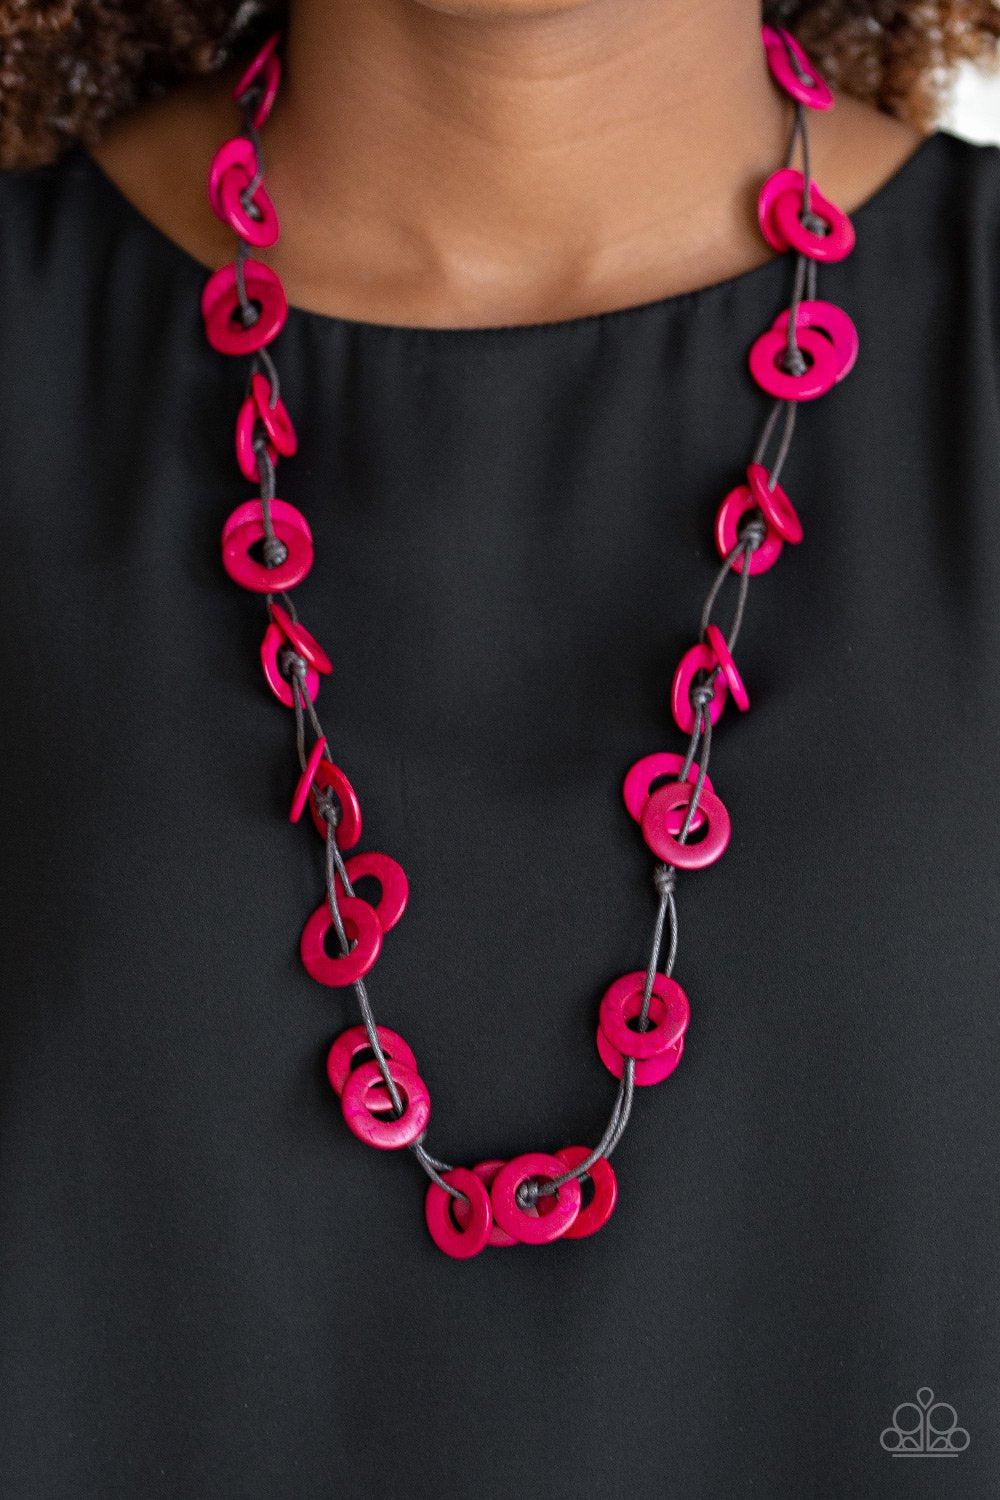 Waikiki Winds Pink Wood Necklace - Paparazzi Accessories - lightbox -CarasShop.com - $5 Jewelry by Cara Jewels